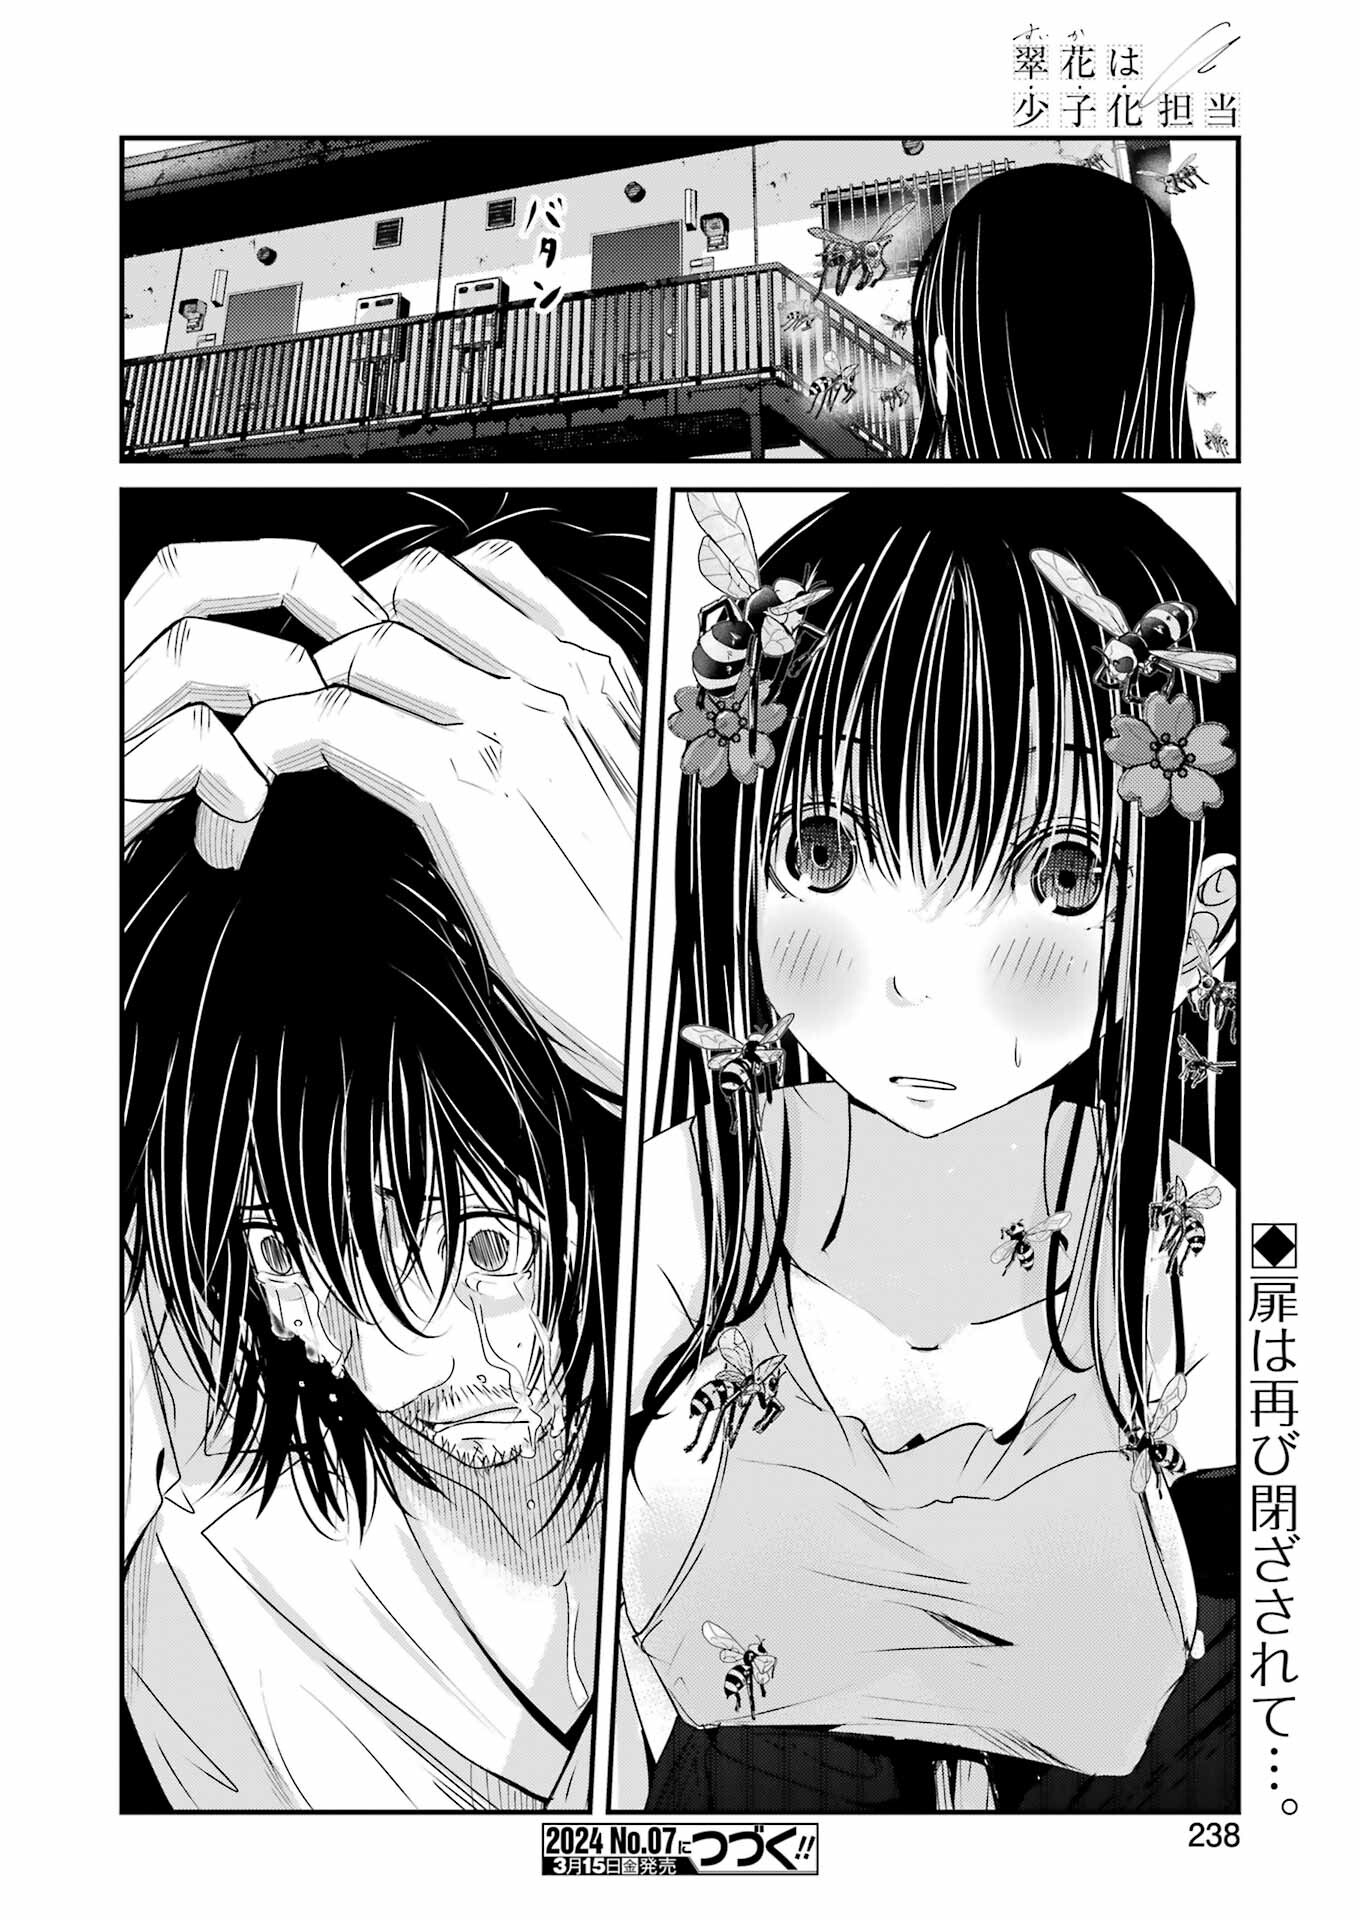 Suika wa Shoushika Tantou - Chapter 6 - Page 24